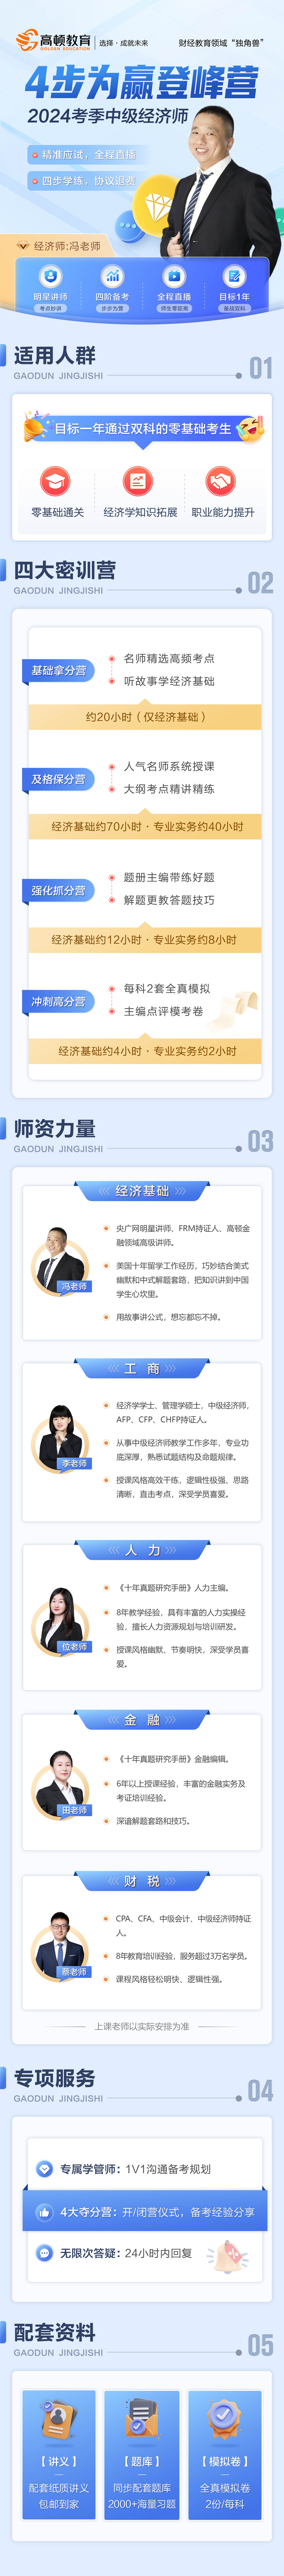 https://simg01.gaodunwangxiao.com/uploadfiles/product-center/202401/25/e4ec1_20240125161950.jpg